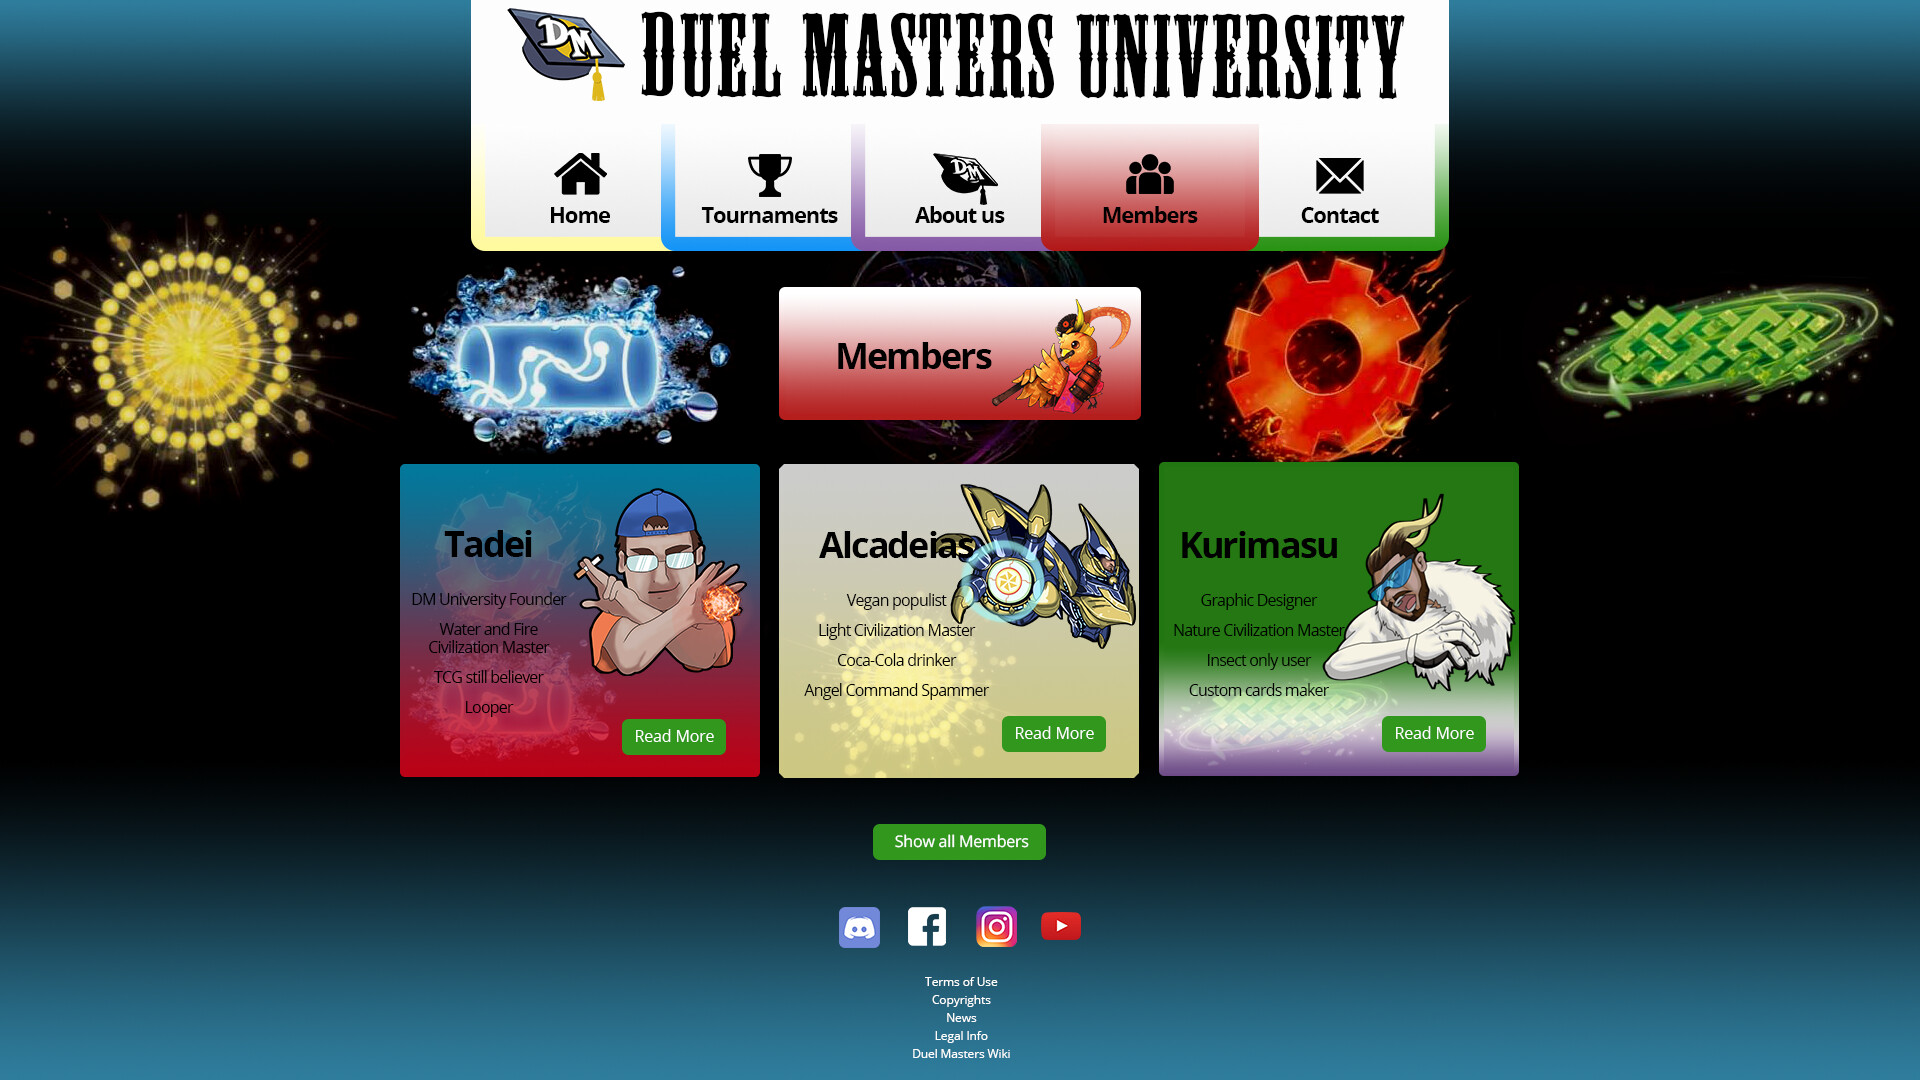 ArtStation - Duel Masters University Web Design Template